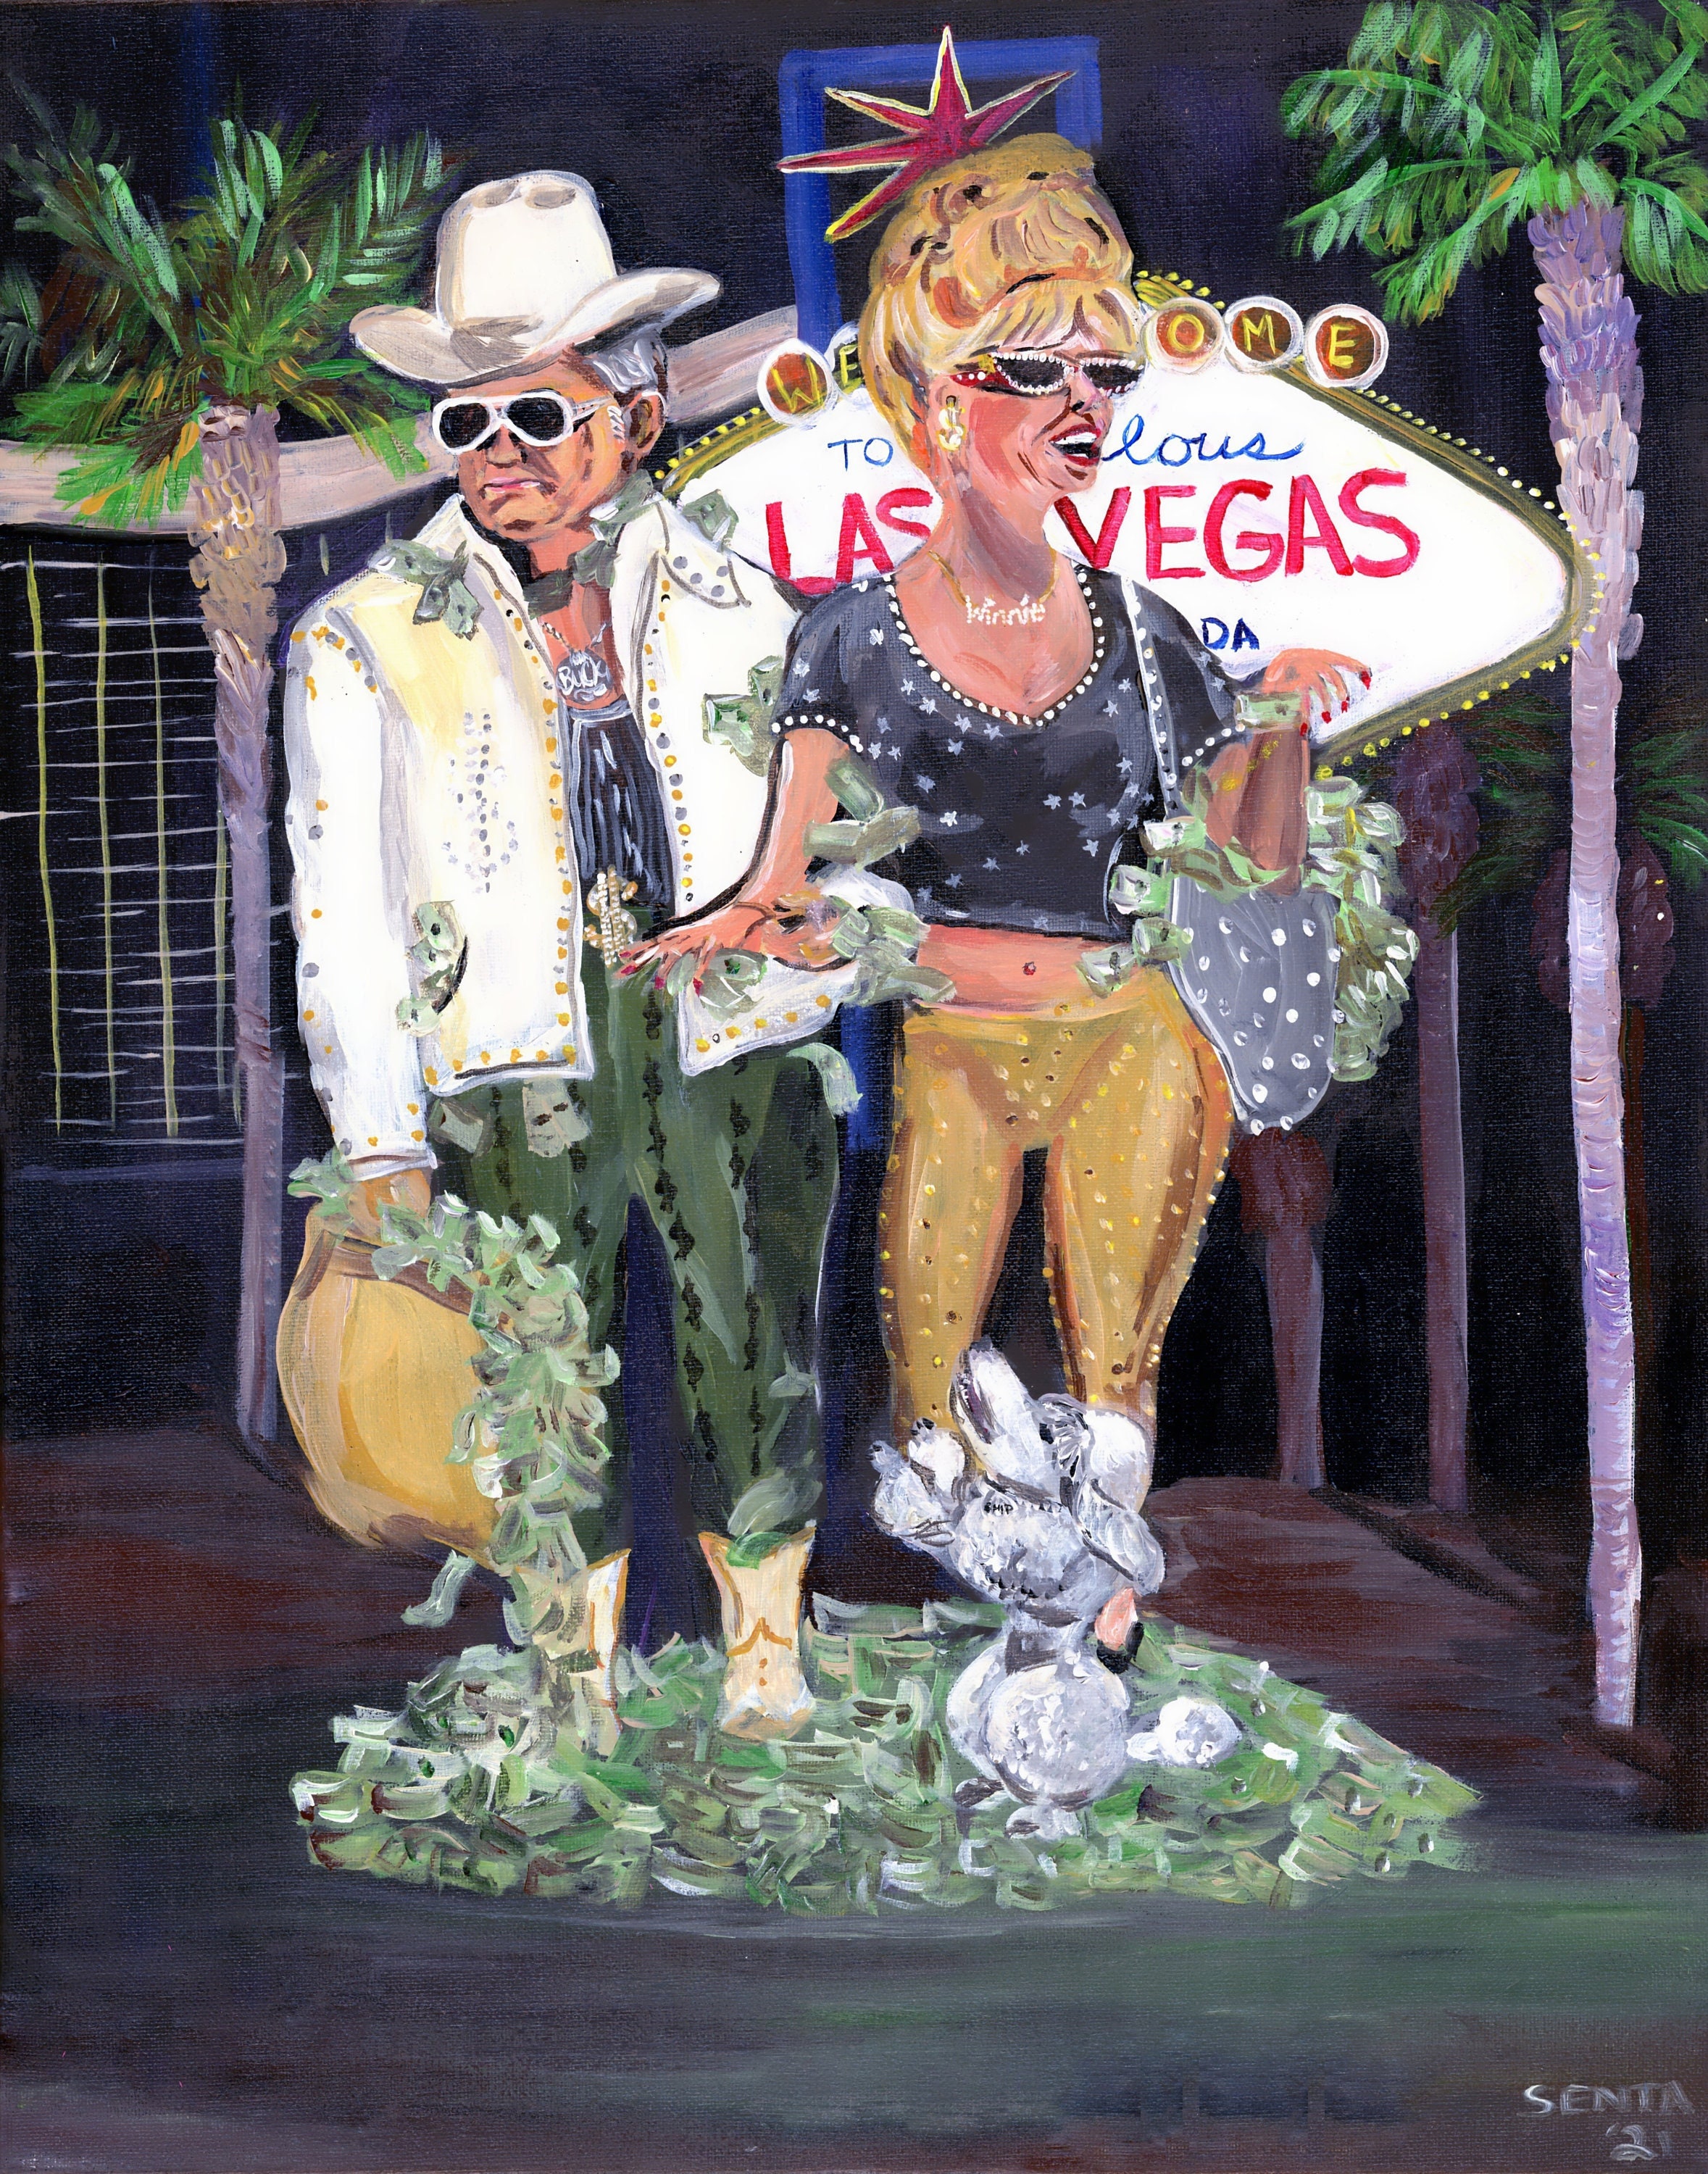 Viva Las Vegas a Fun and Funky PoP Art Painting of the Vegas